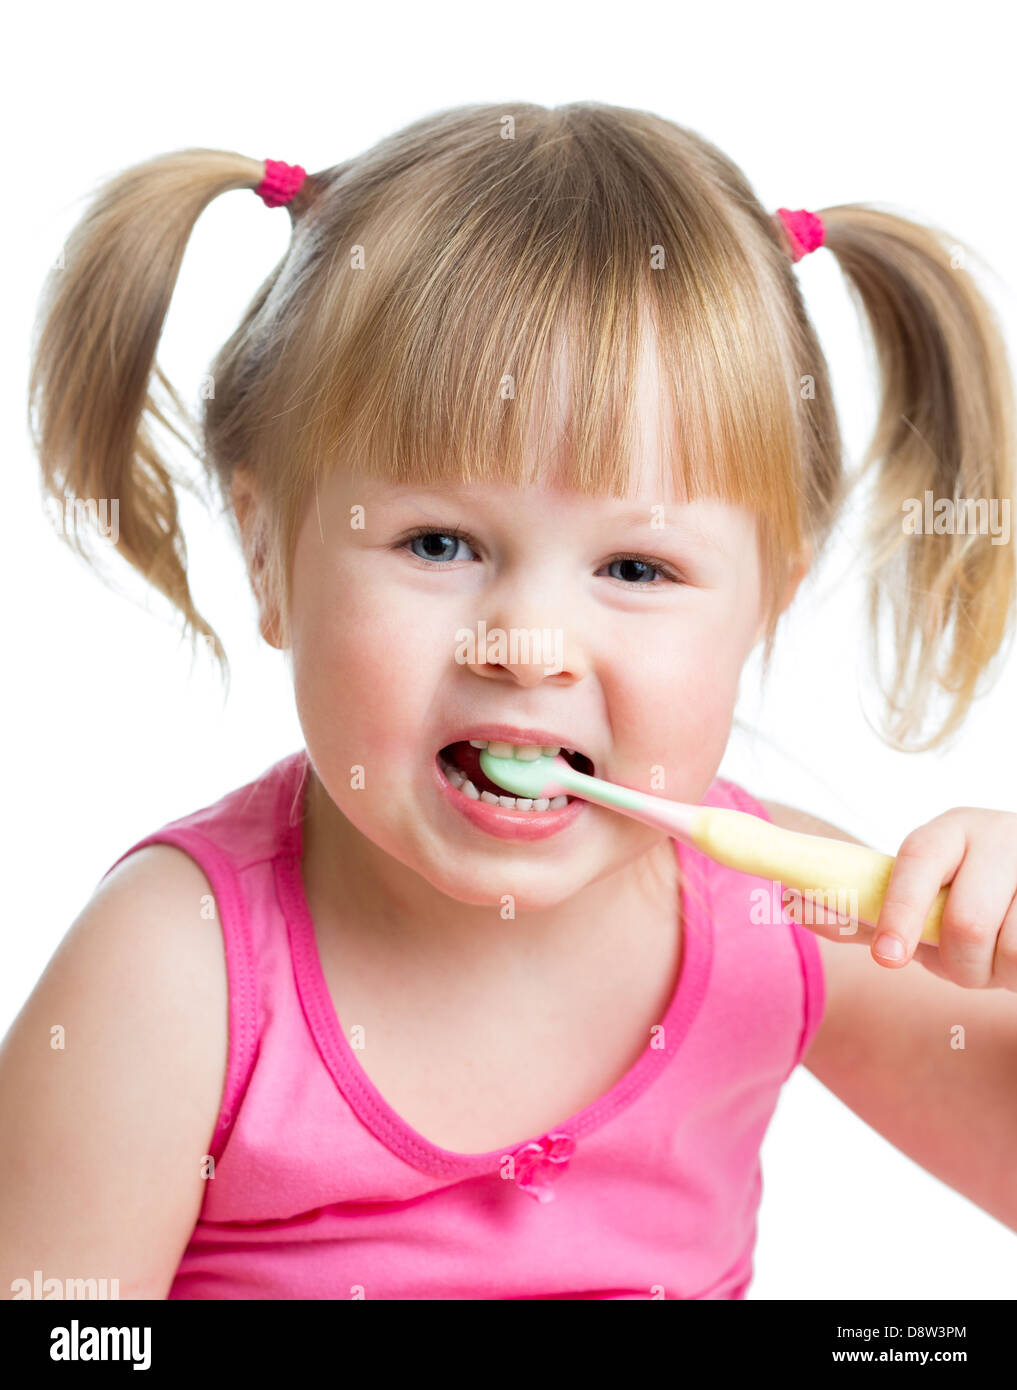 kid girl brushing teeth isolated Stock Photo